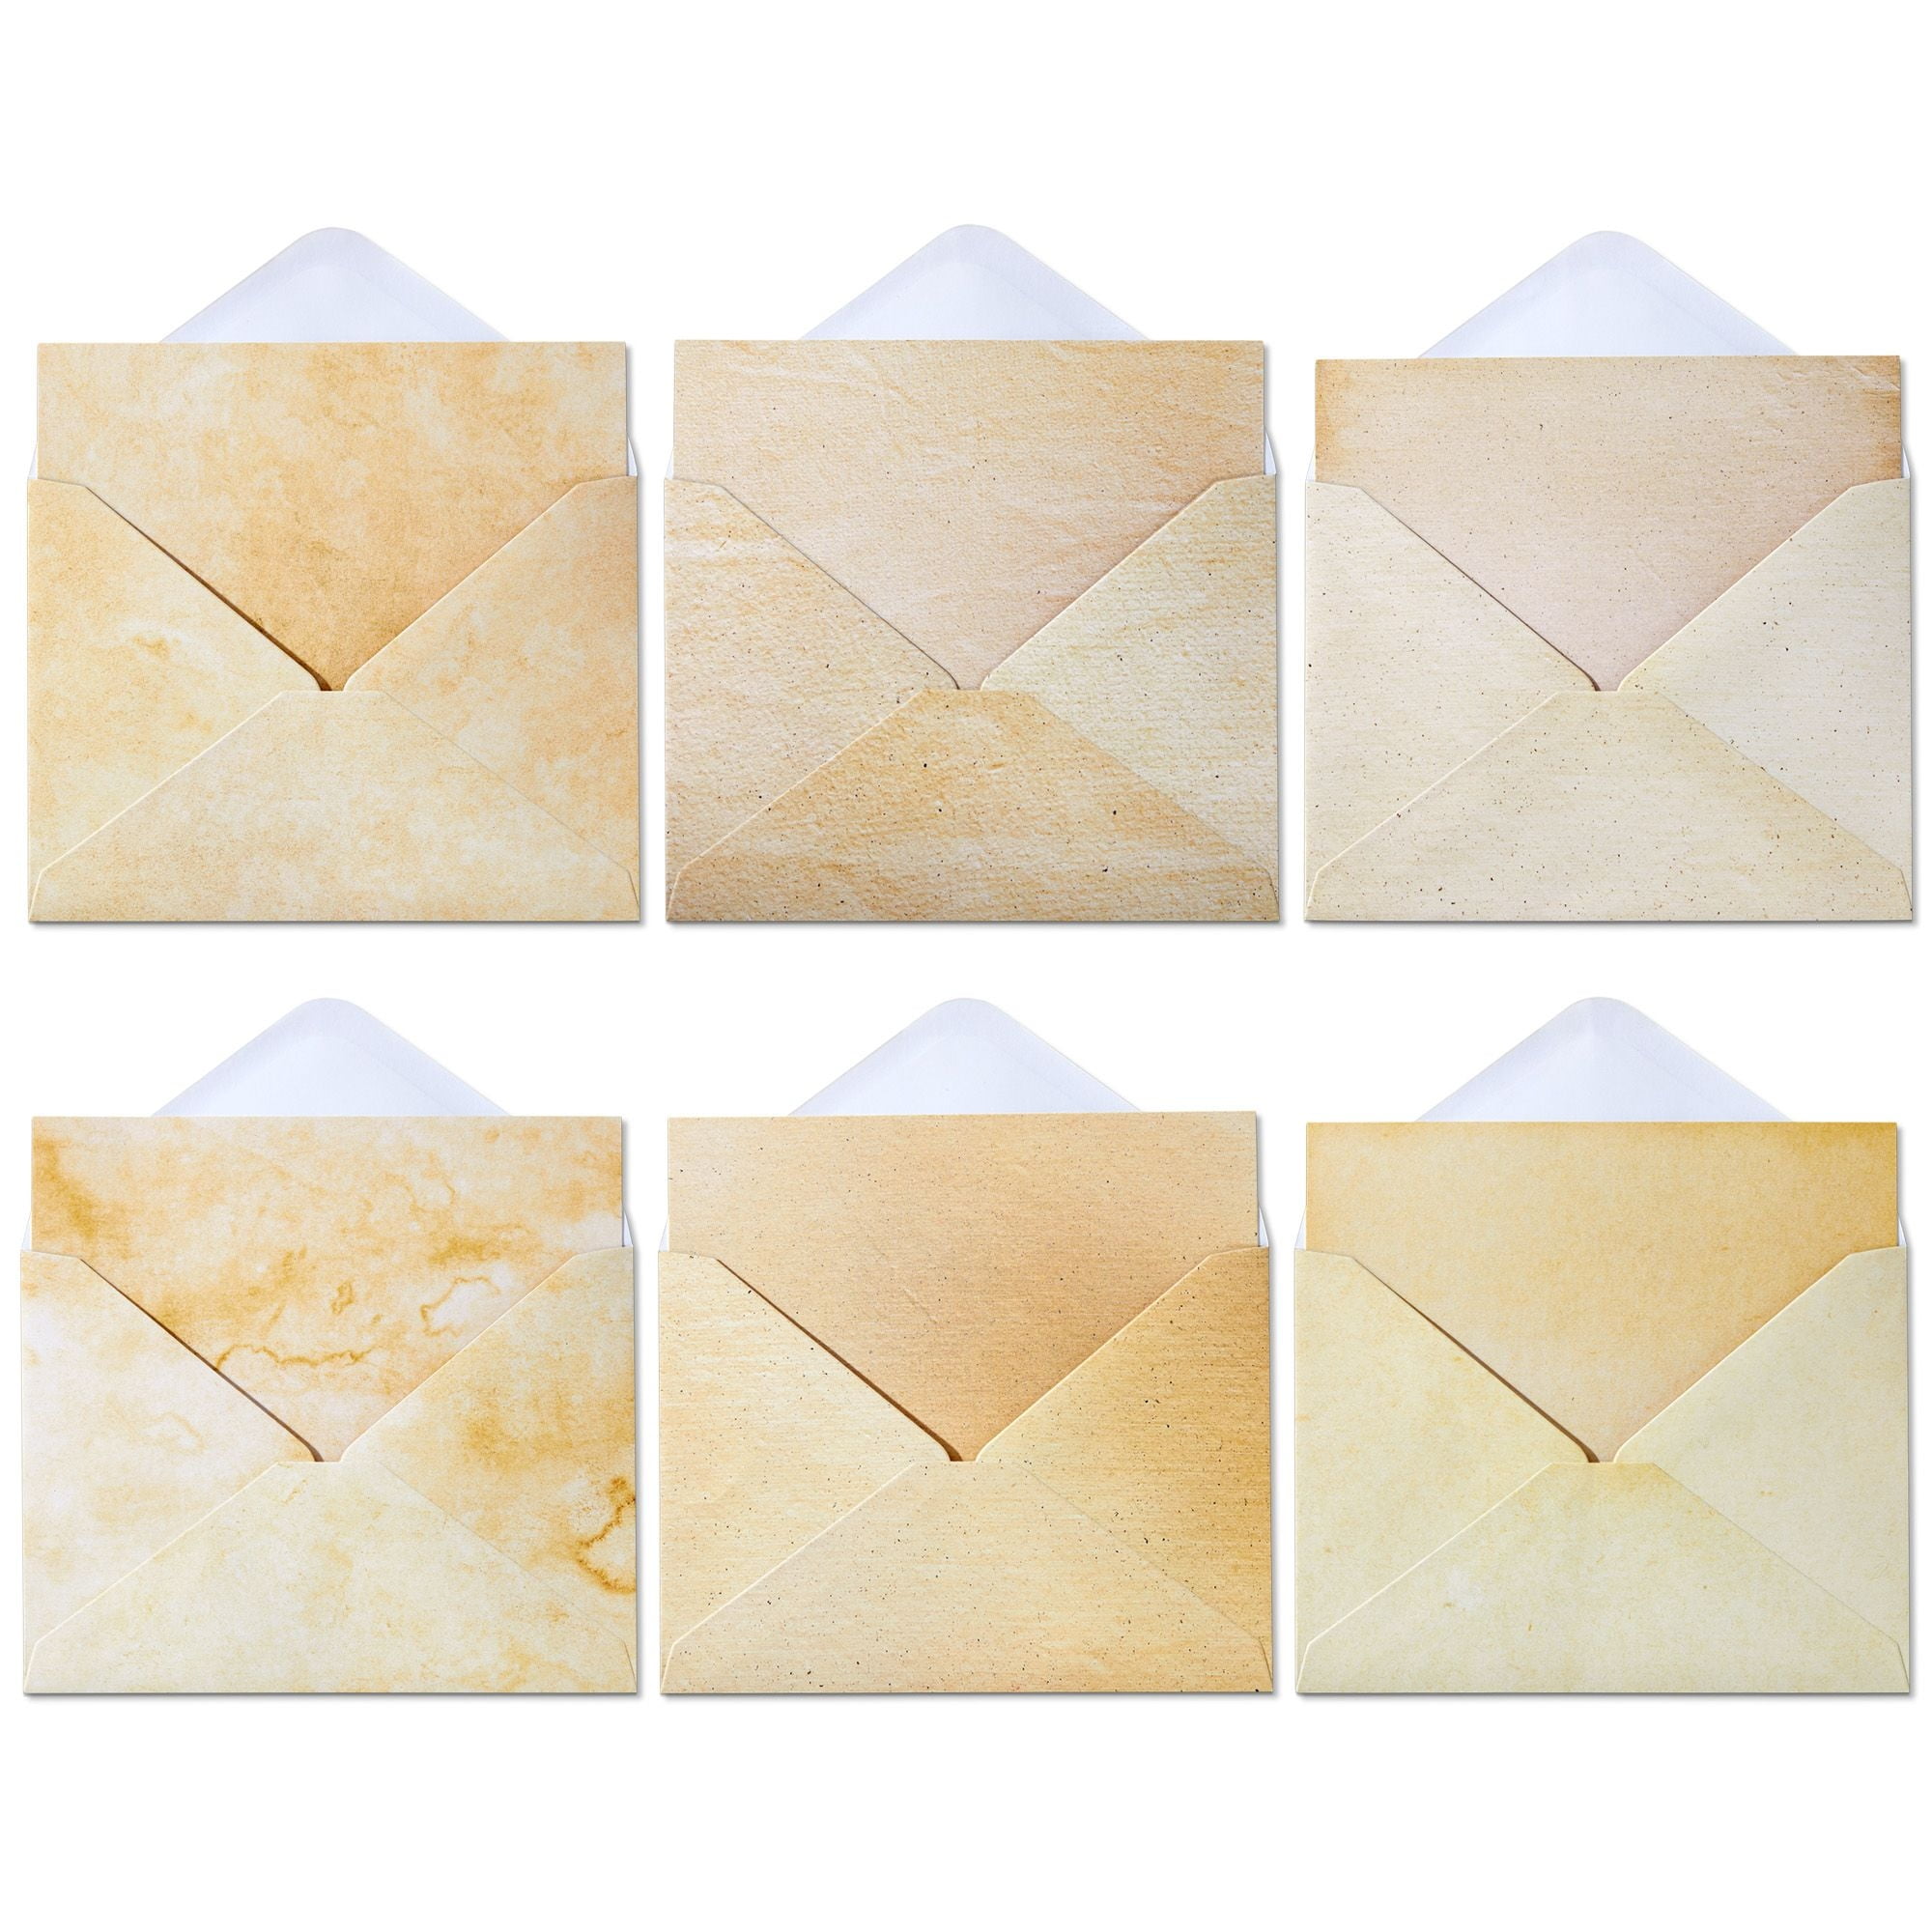 Blank Vintage Greeting Cards and Envelopes, 6 Old Aged Design (4x6